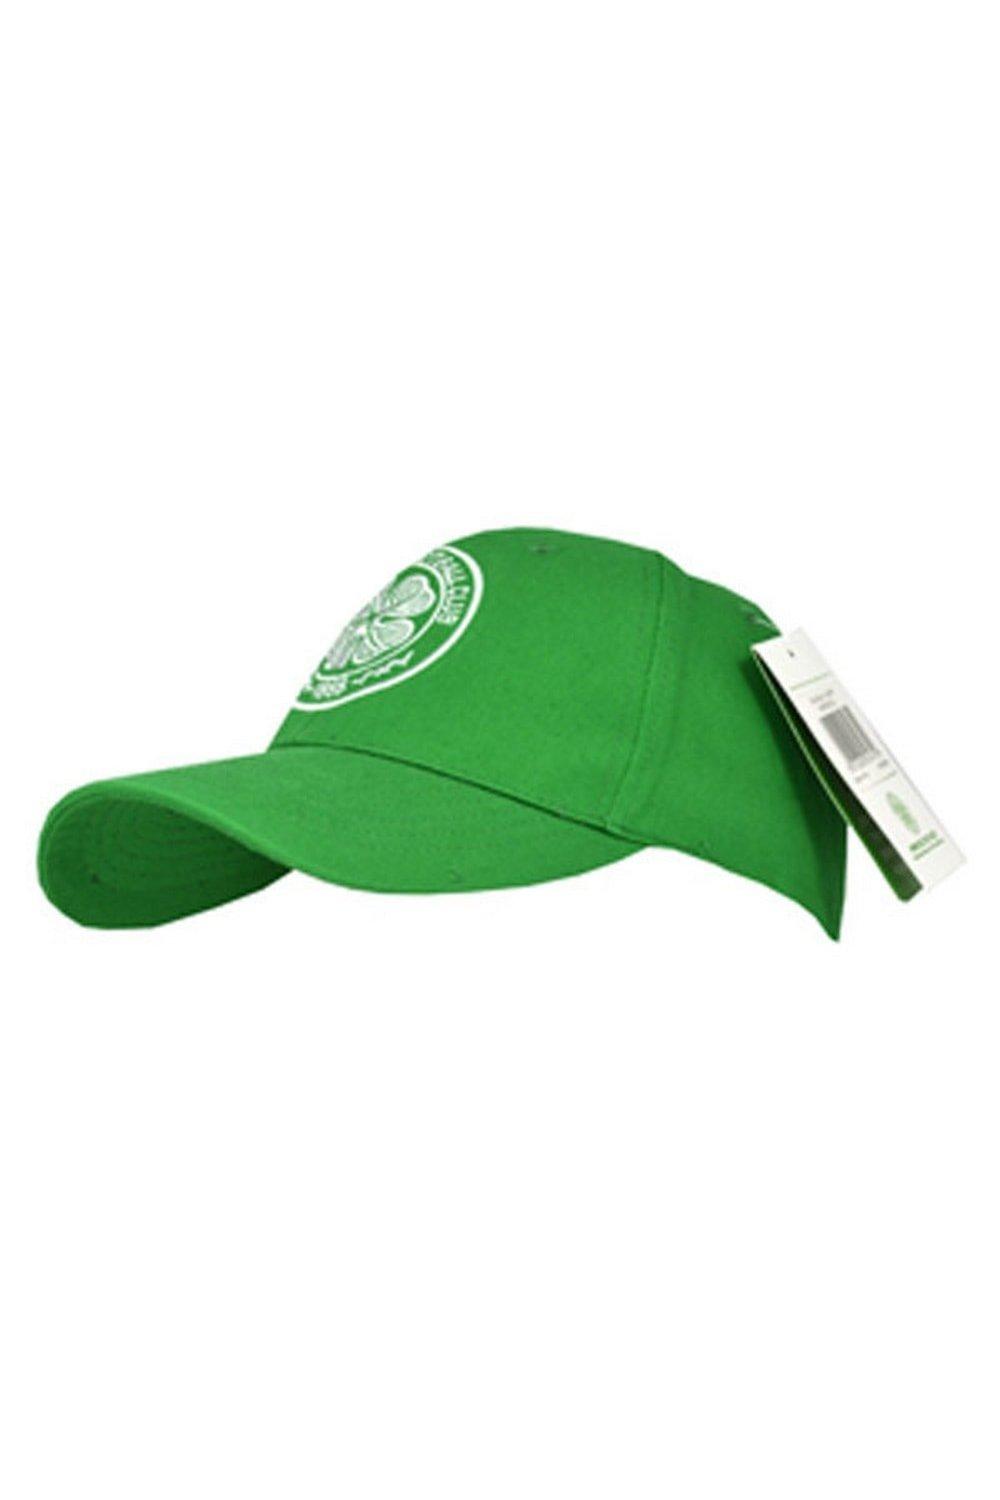 Celtic FC Baseball Cap|green